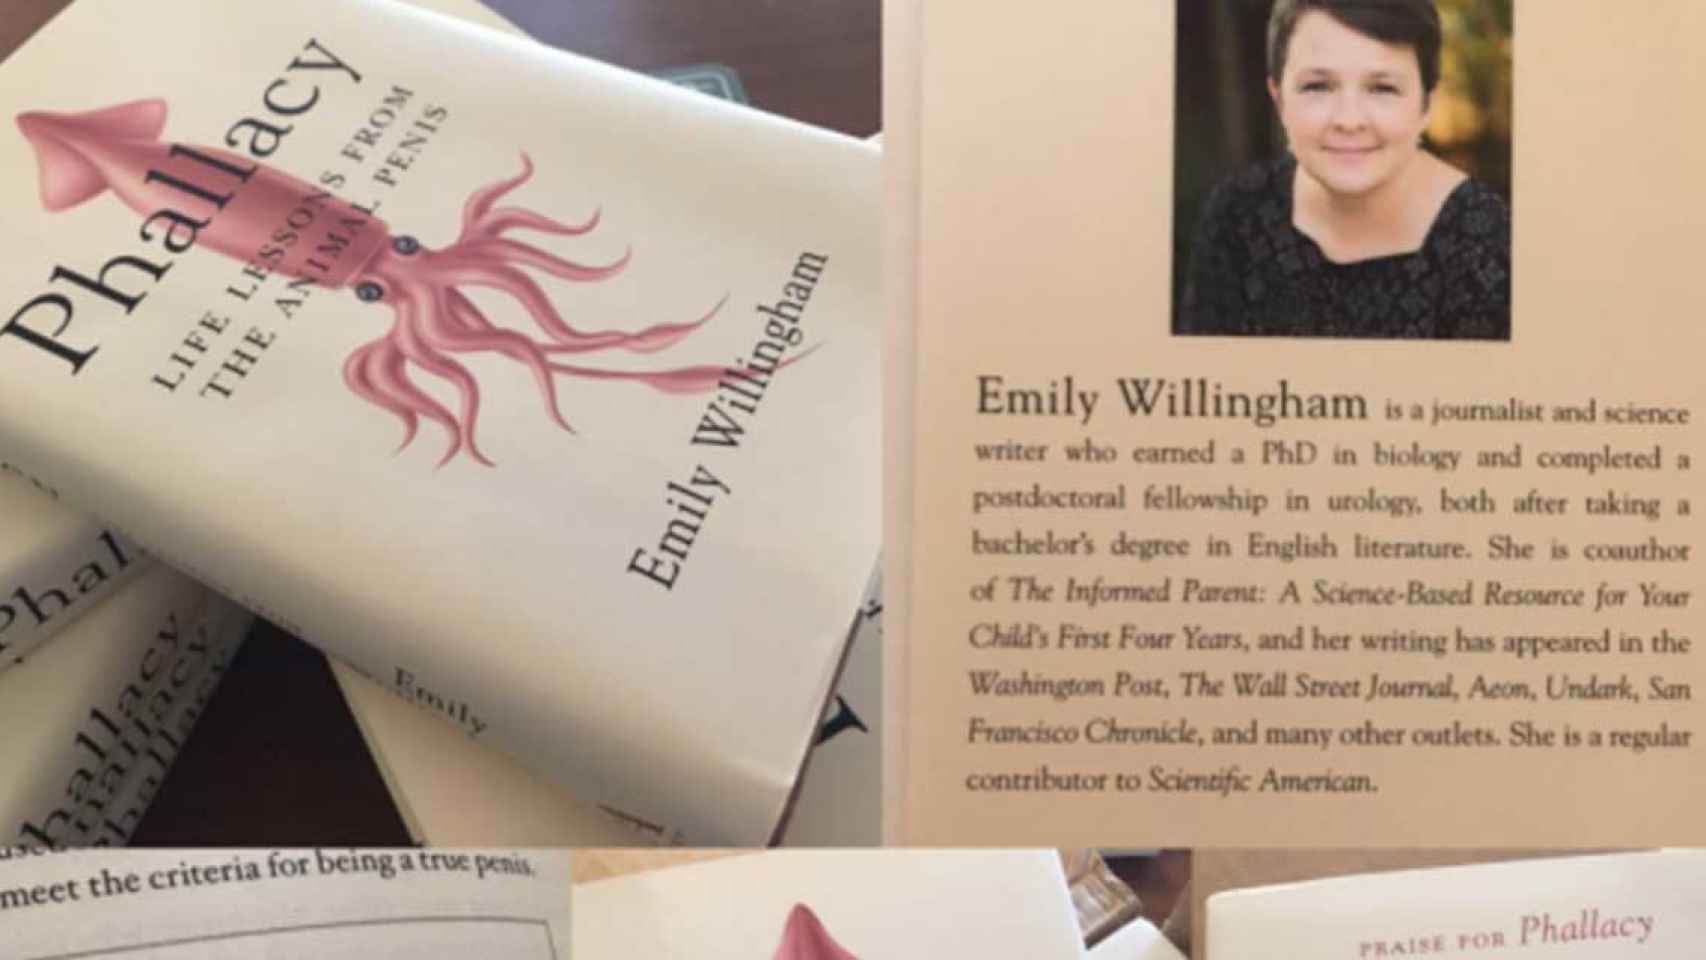 La portada del libro de Emily Willingham sobre el miembro viril / TWITTER